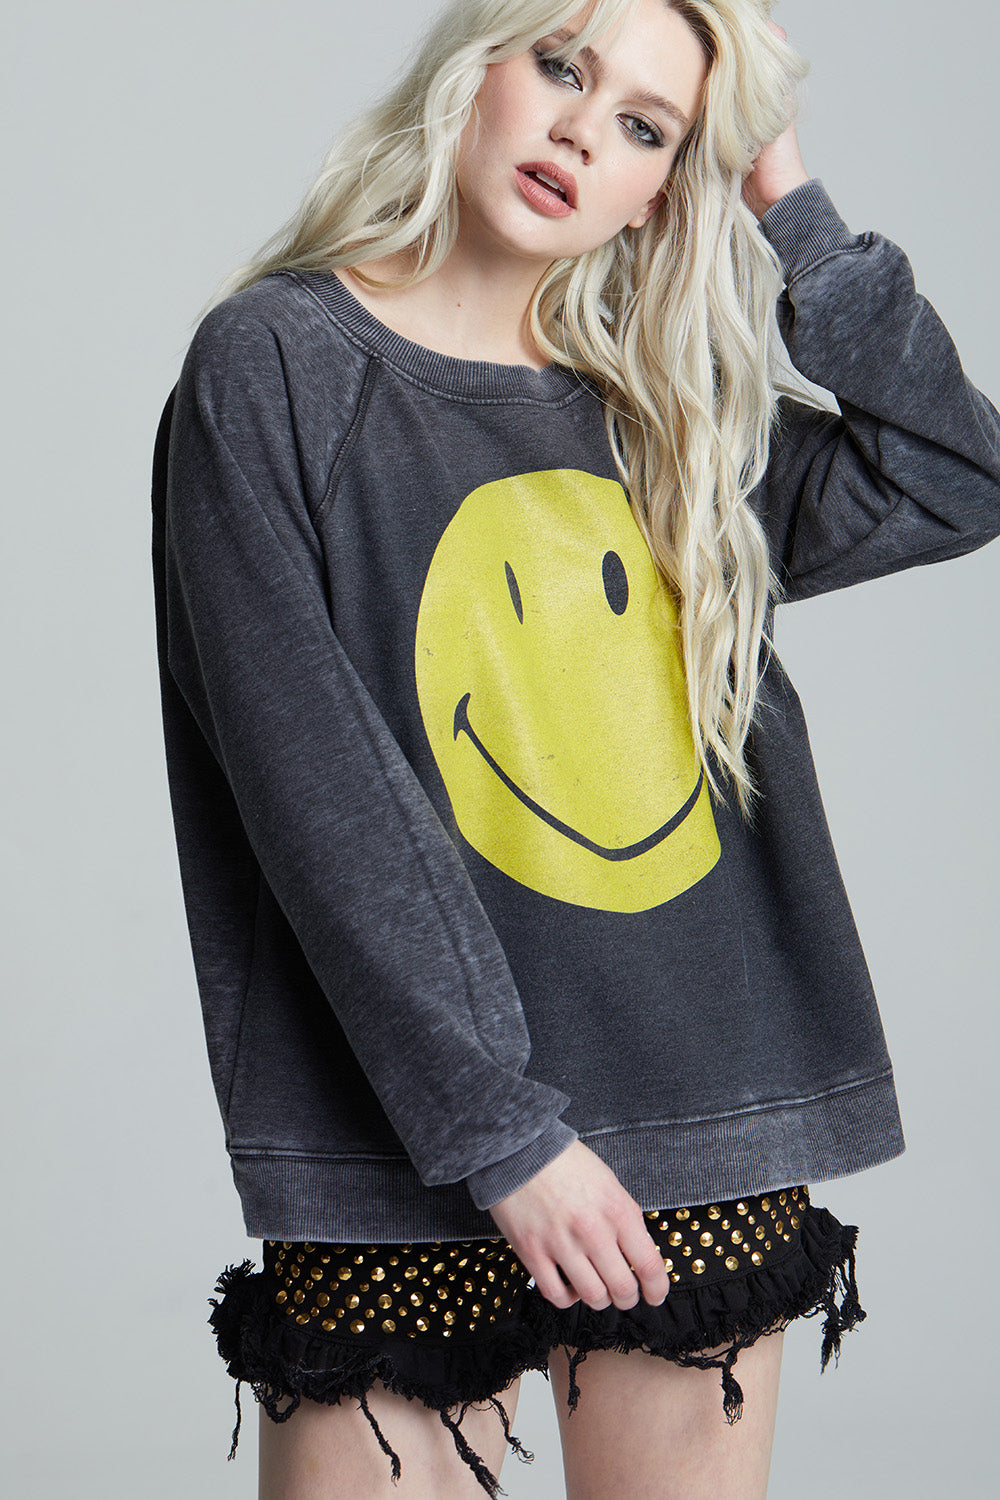 Smiley Take the Time to Smile Sweatshirt